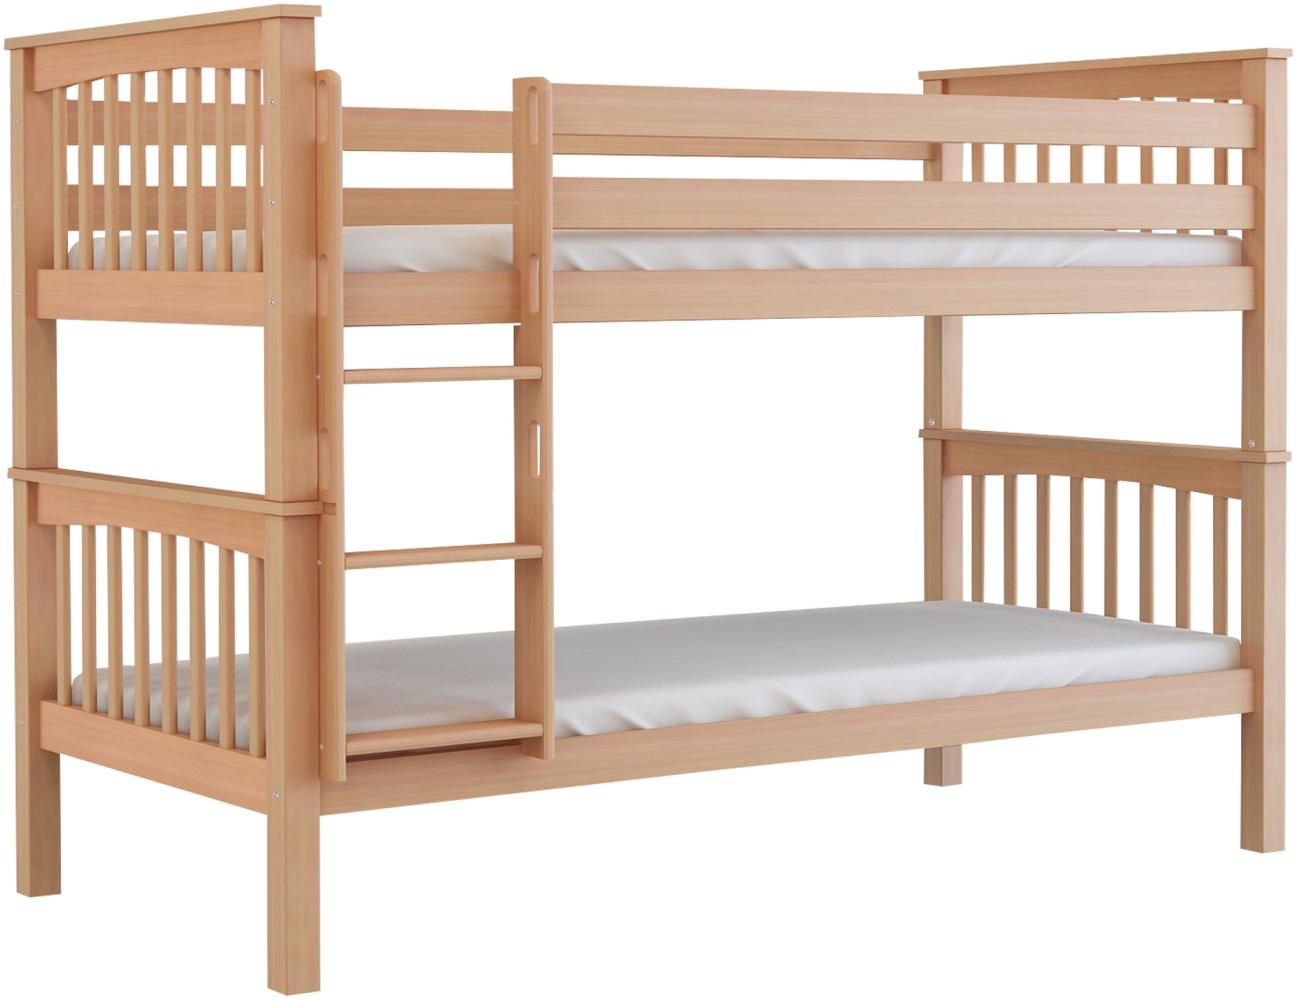 Polini-Kids 'David' Etagenbett mit 2 Bettkästen, massives Buchenholz natur, 90 x 200 cm Bild 1